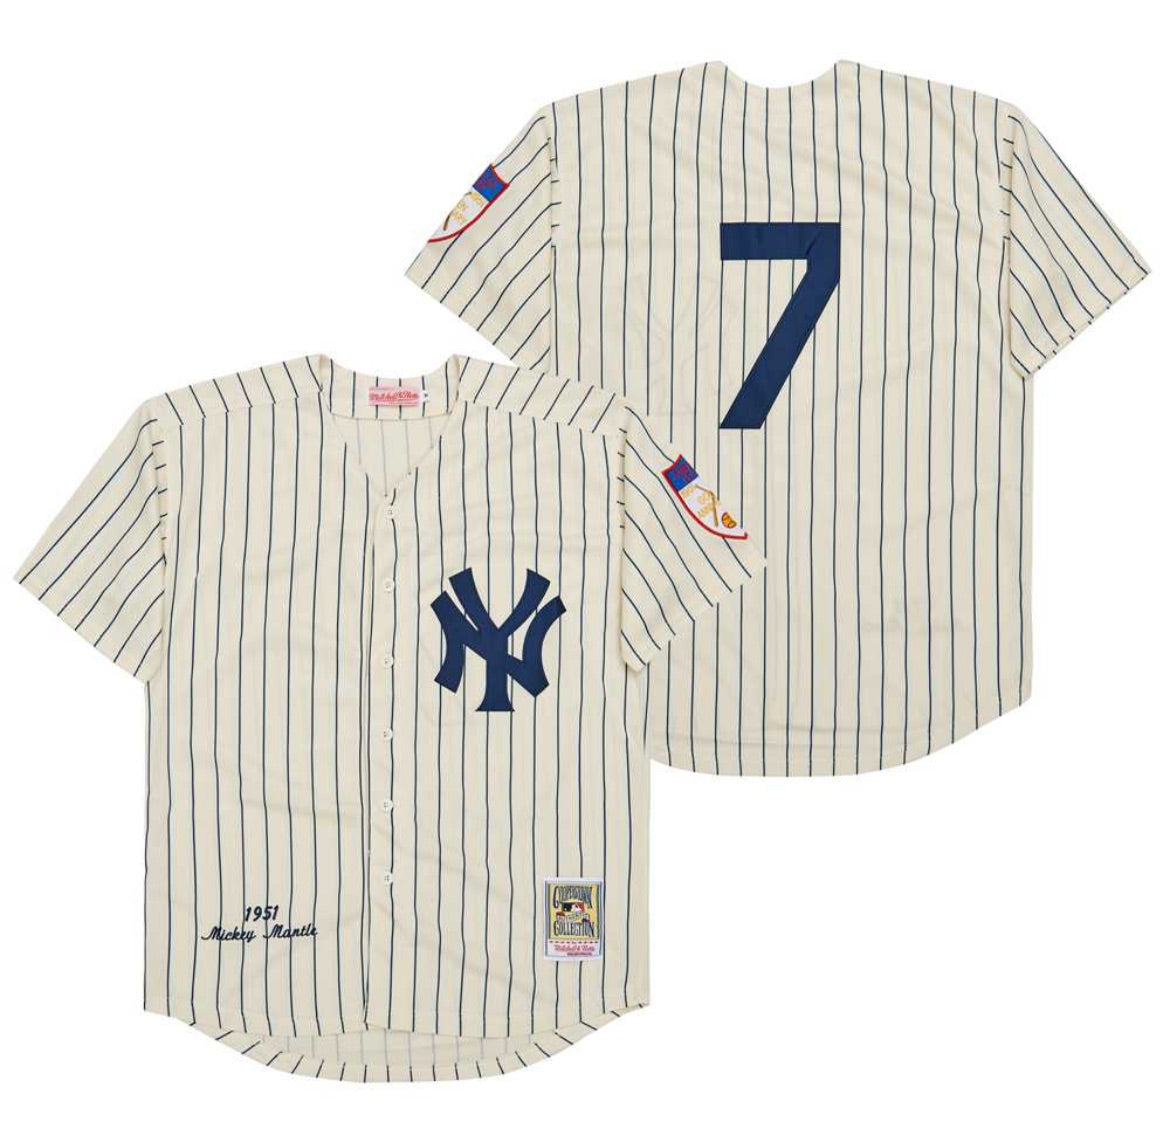 Mickey Mantle New York Yankees Mitchell & Ness MLB Authentic Jersey - Cream